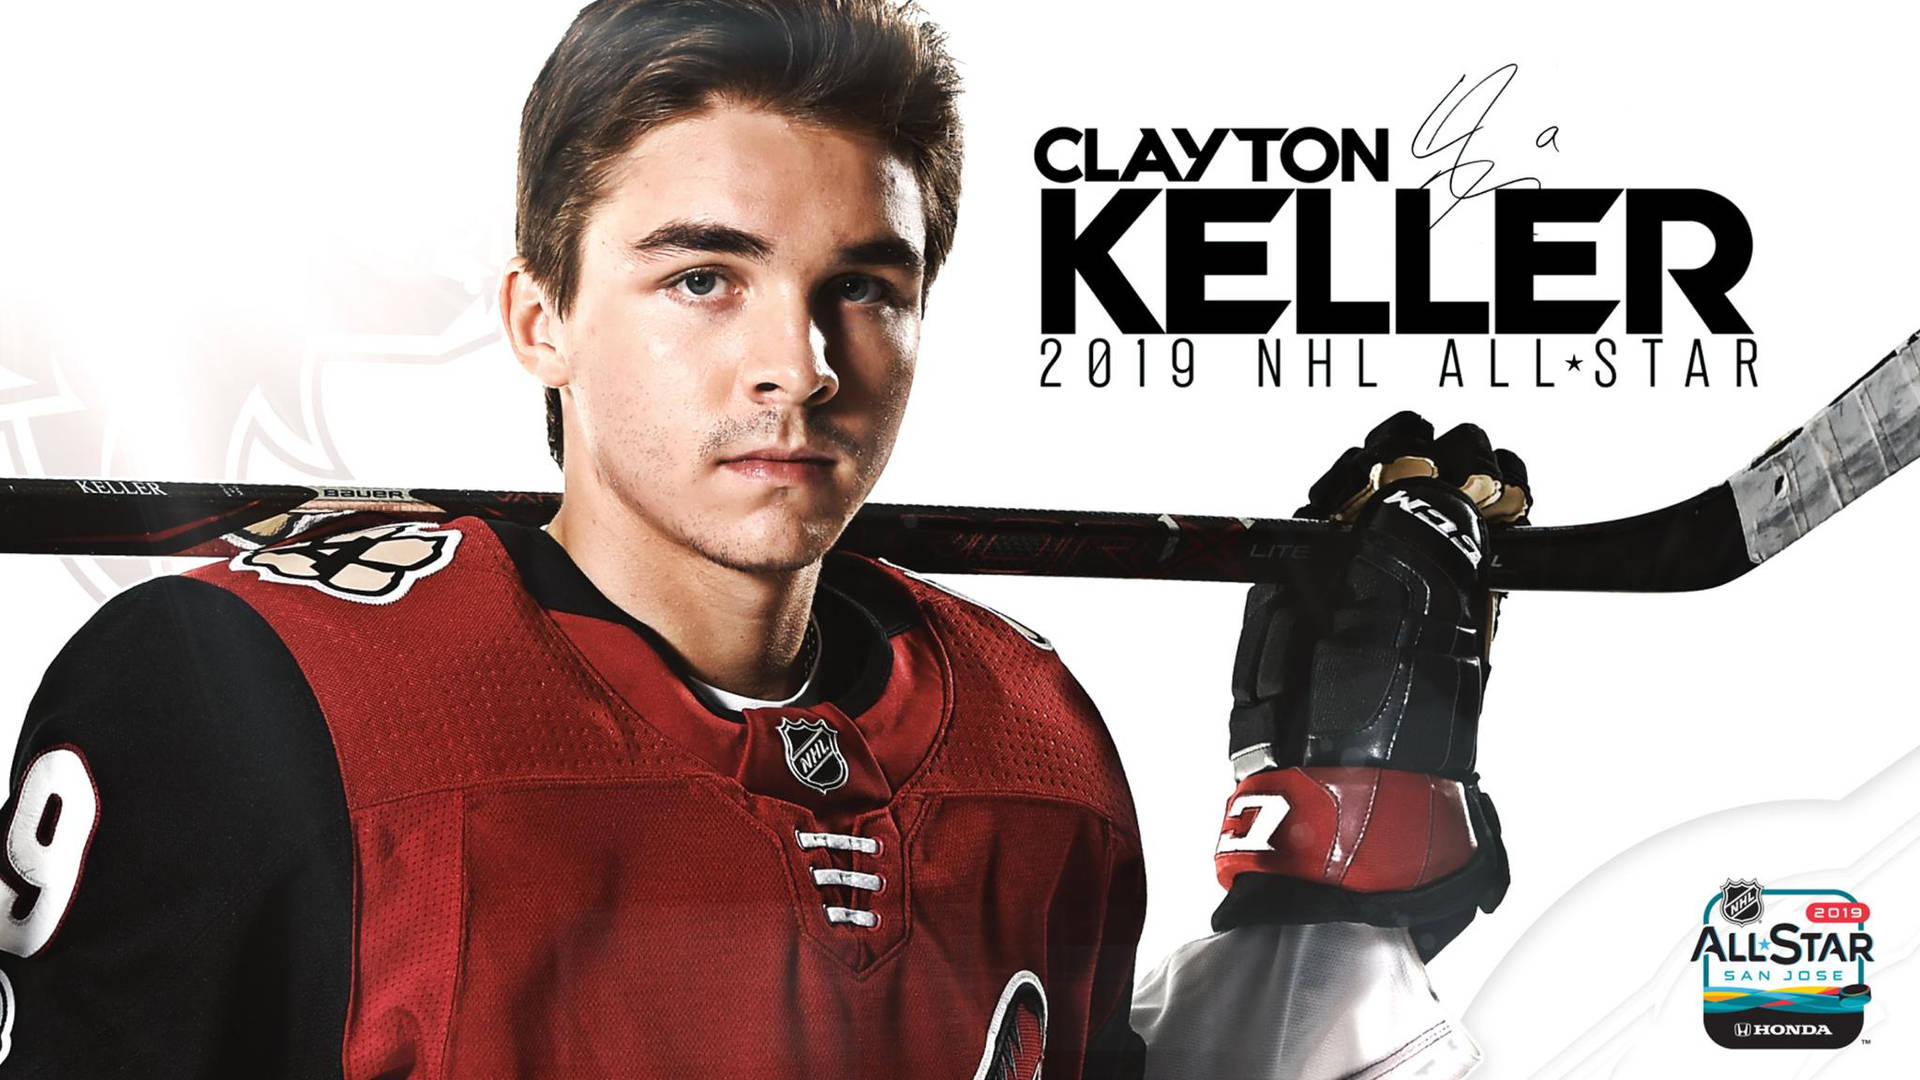 Clayton Keller 2019 Nhl All-star Game Poster Wallpaper